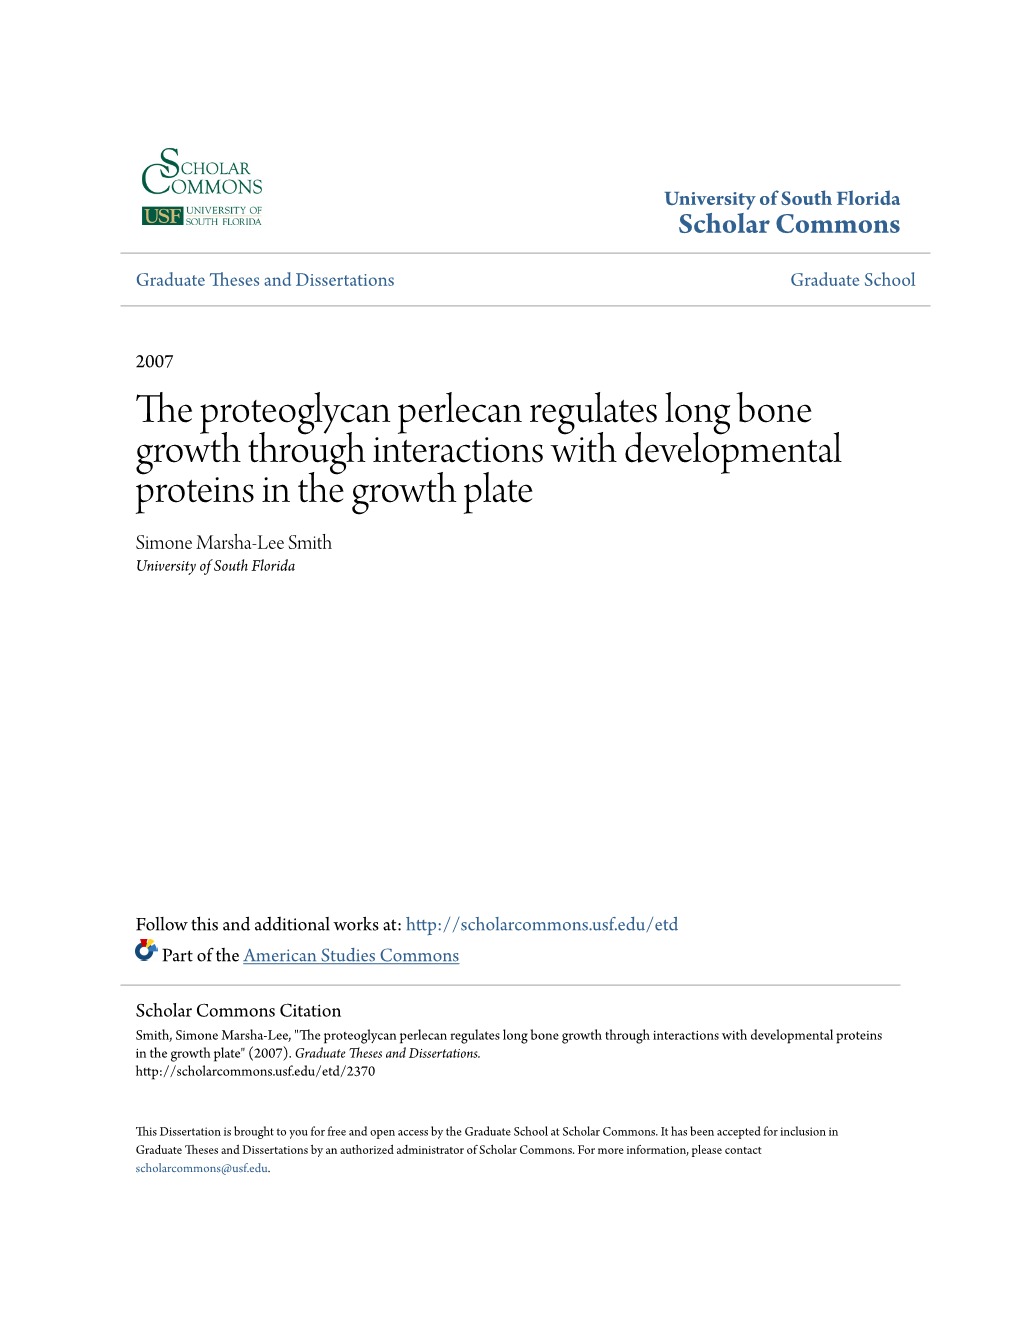 The Proteoglycan Perlecan Regulates Long Bone Growth Through